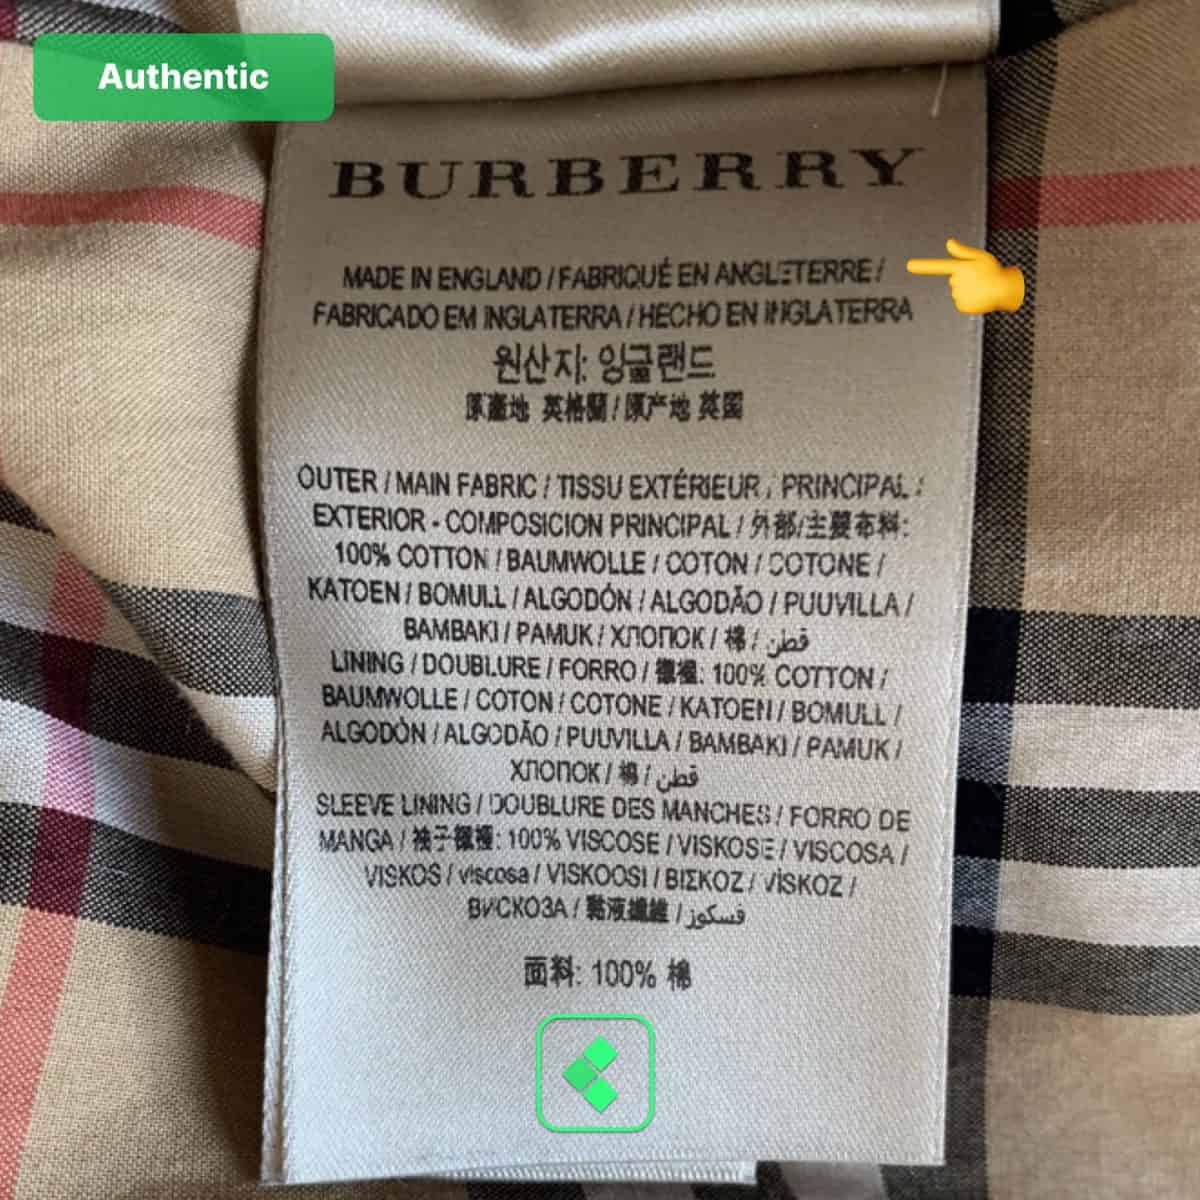 Authentic Burberry Coat tag